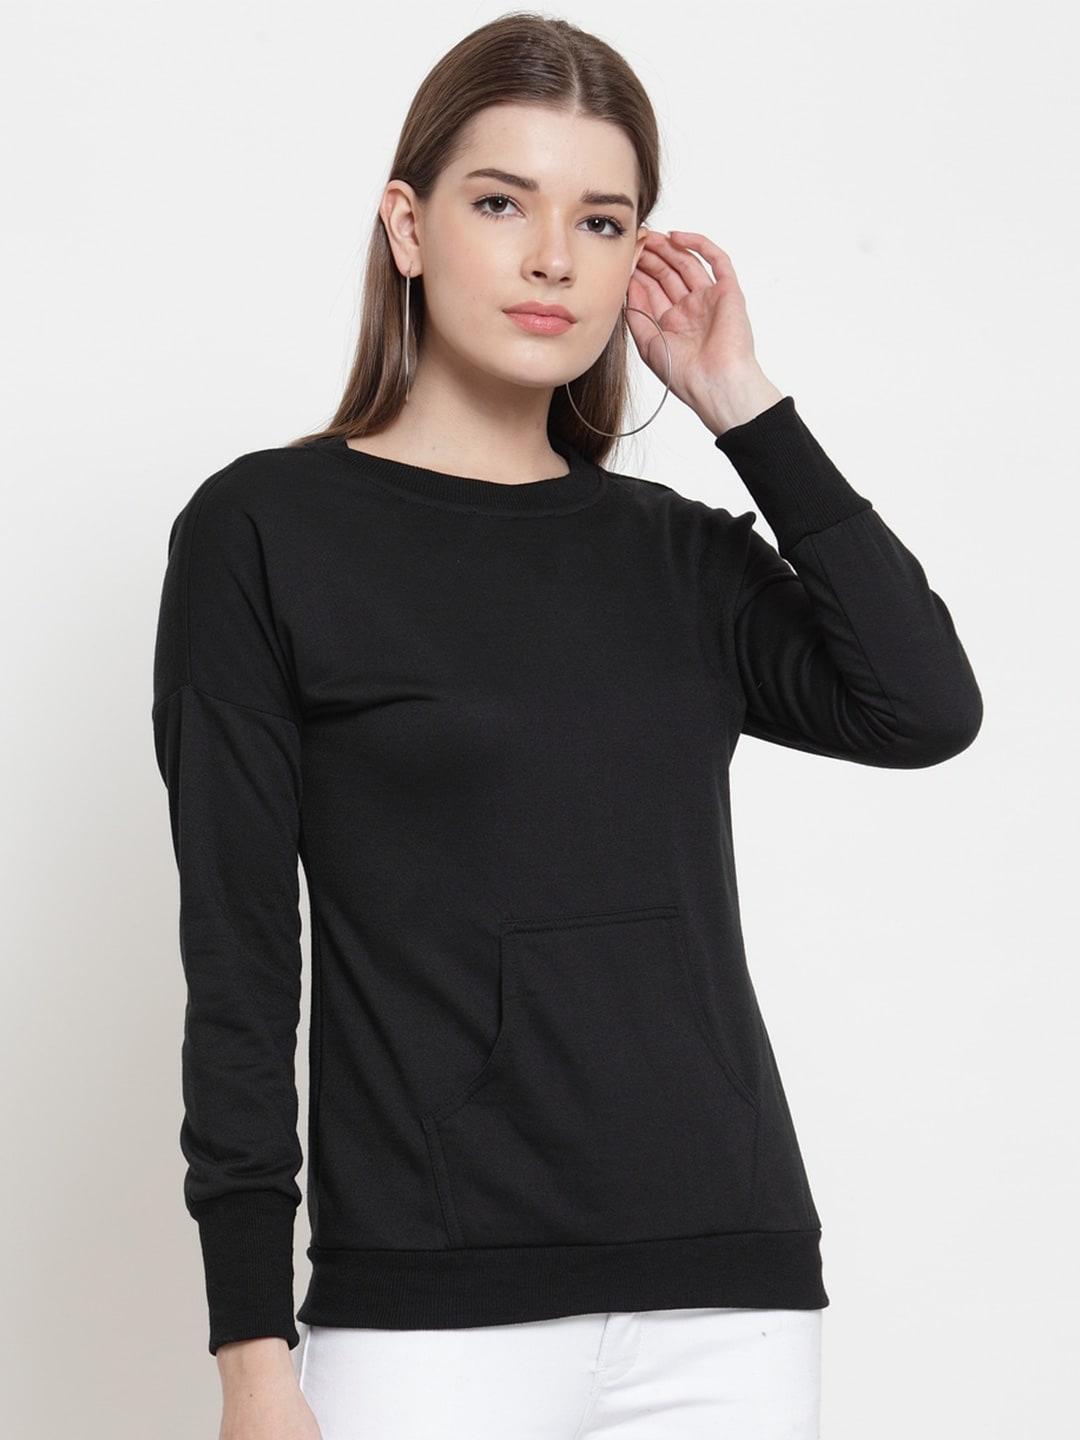 baesd-women-black-sweatshirt